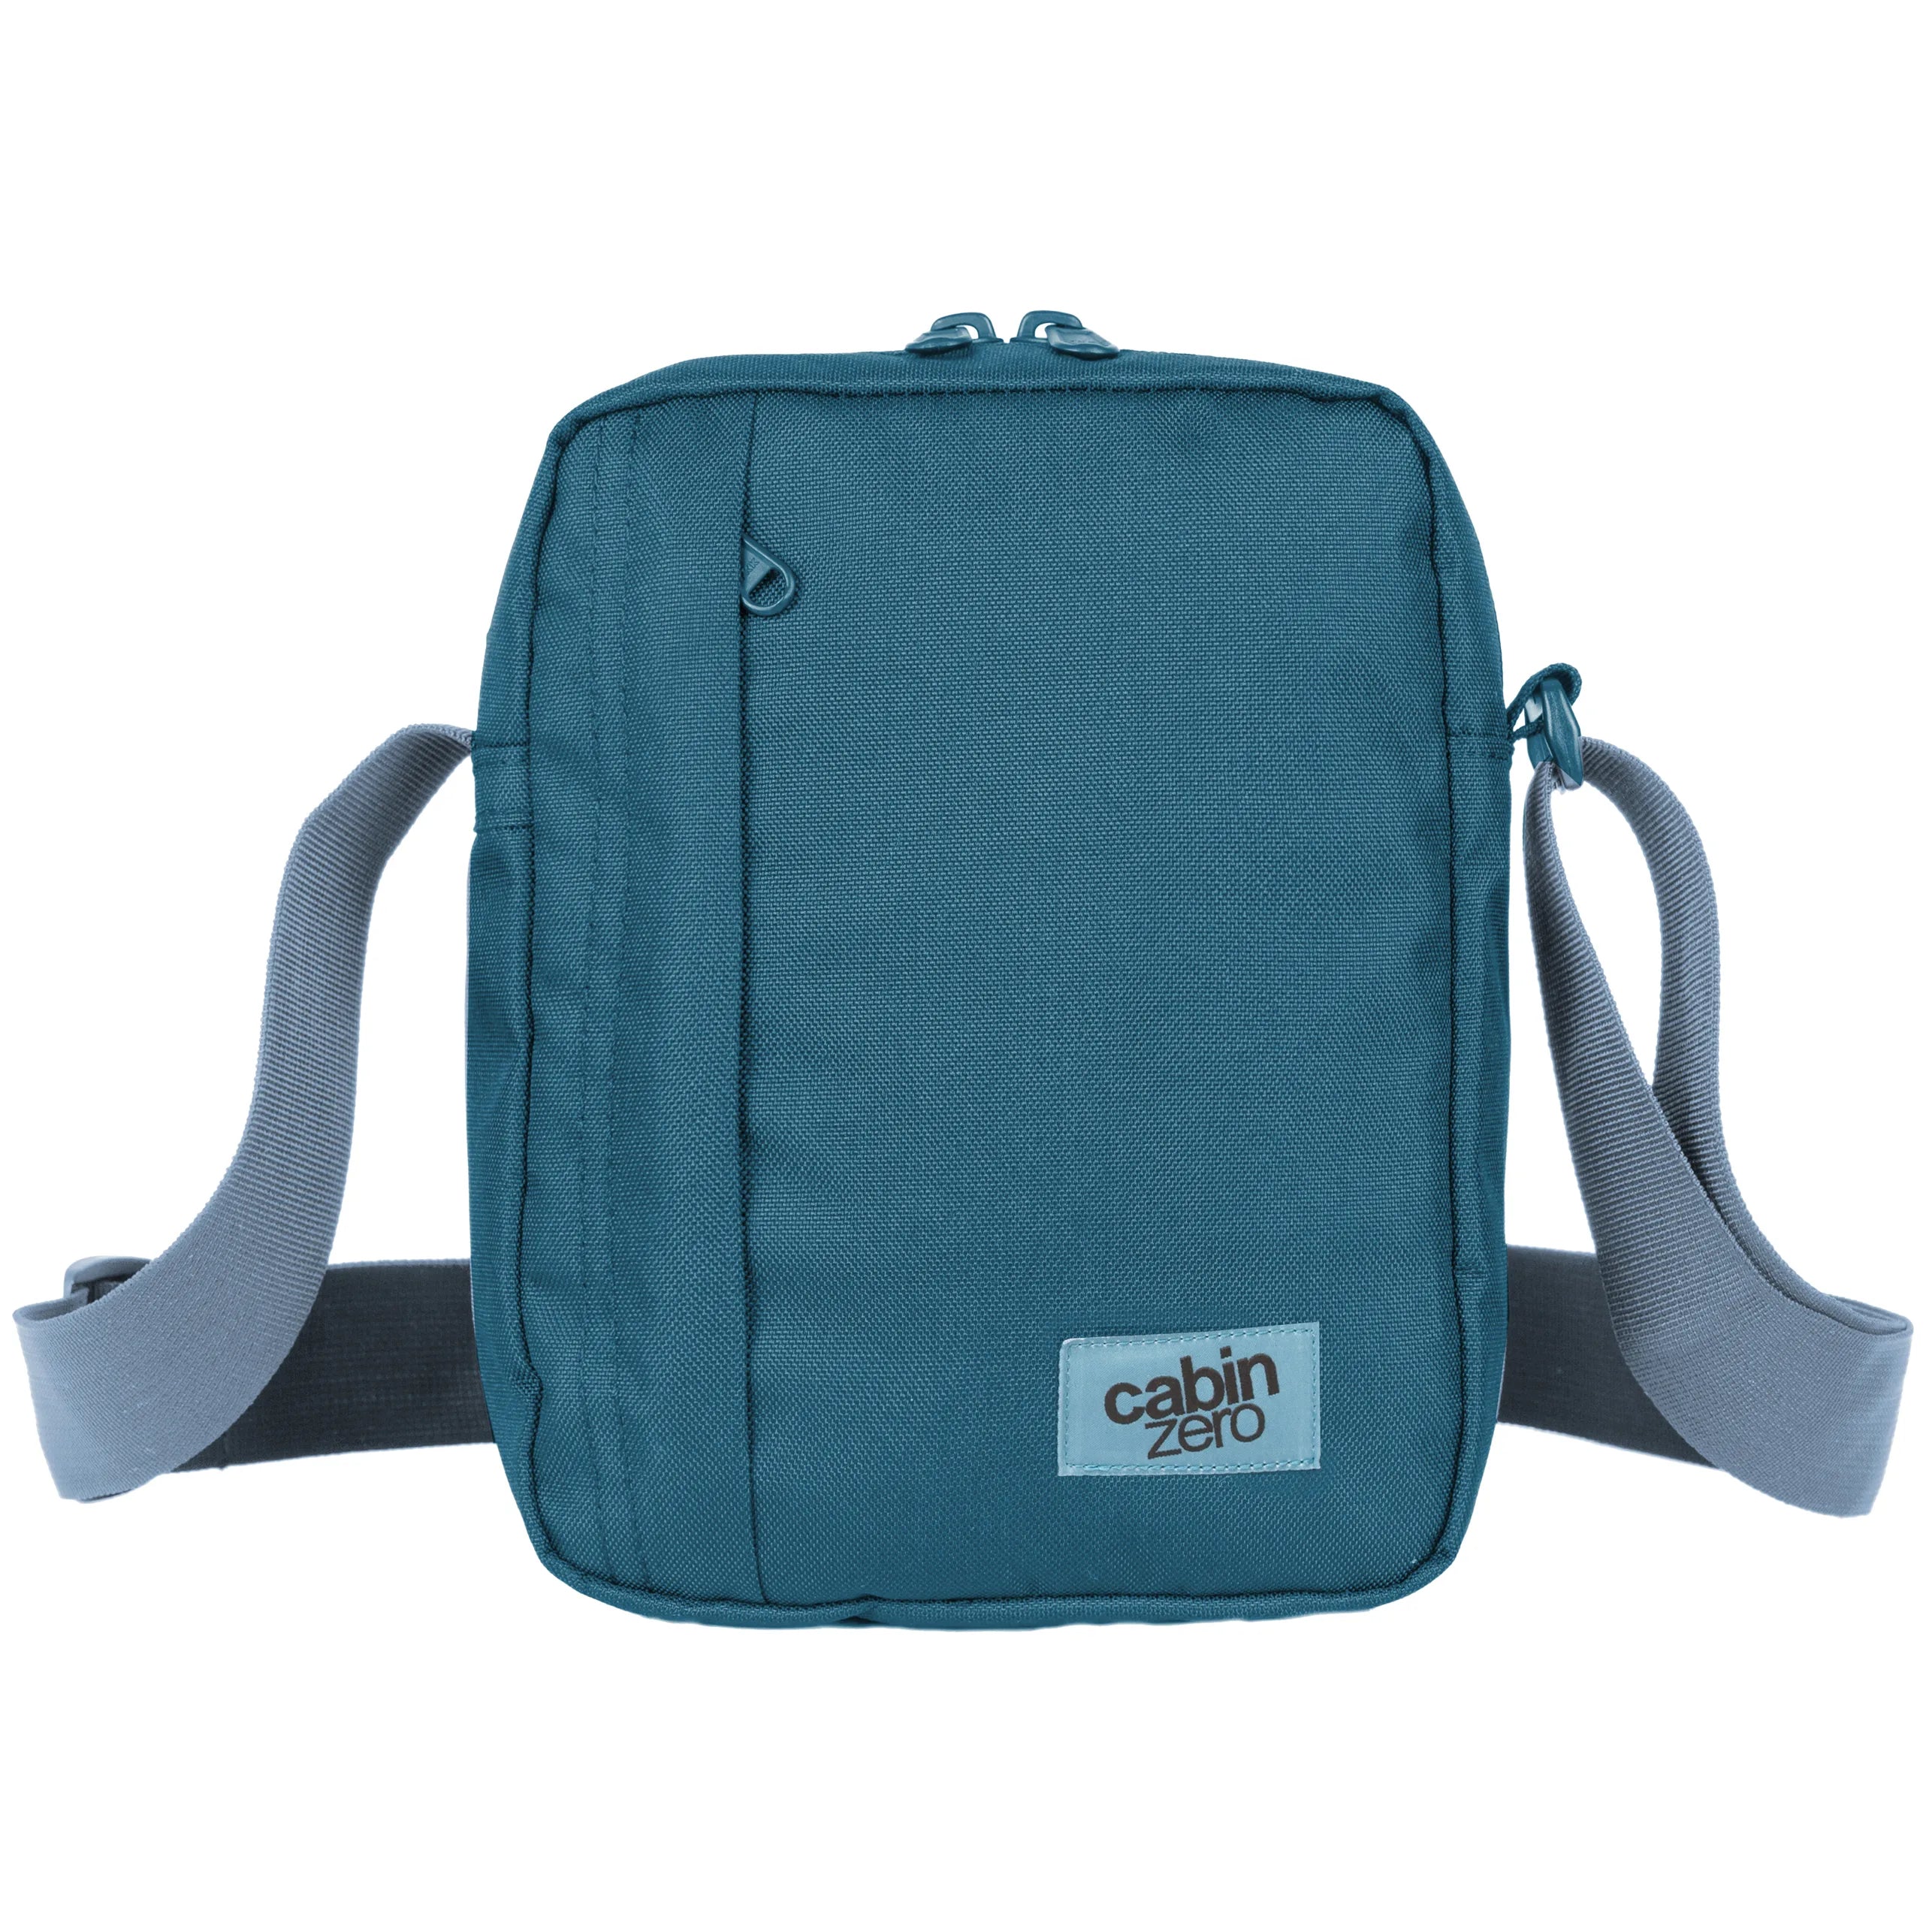 CabinZero Companion Bags Sidekick 3L sac à bandoulière 20 cm - bleu aruba